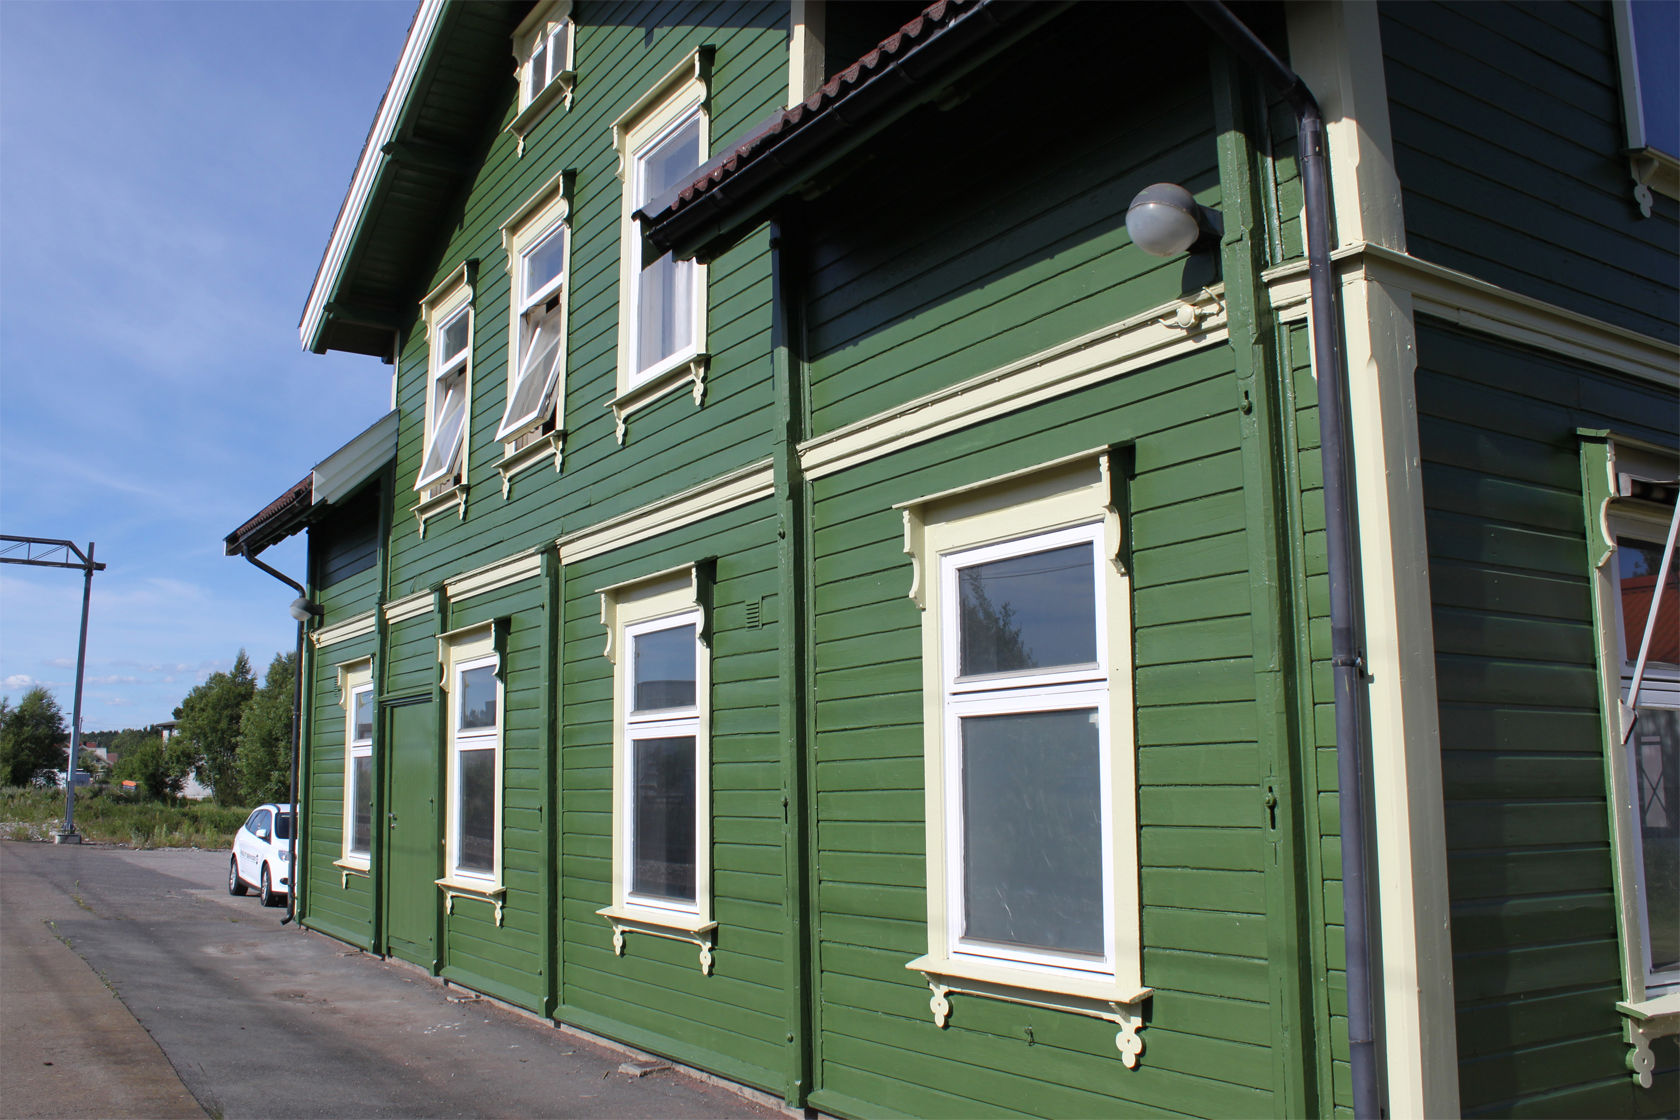 The station building at Skjeberg station